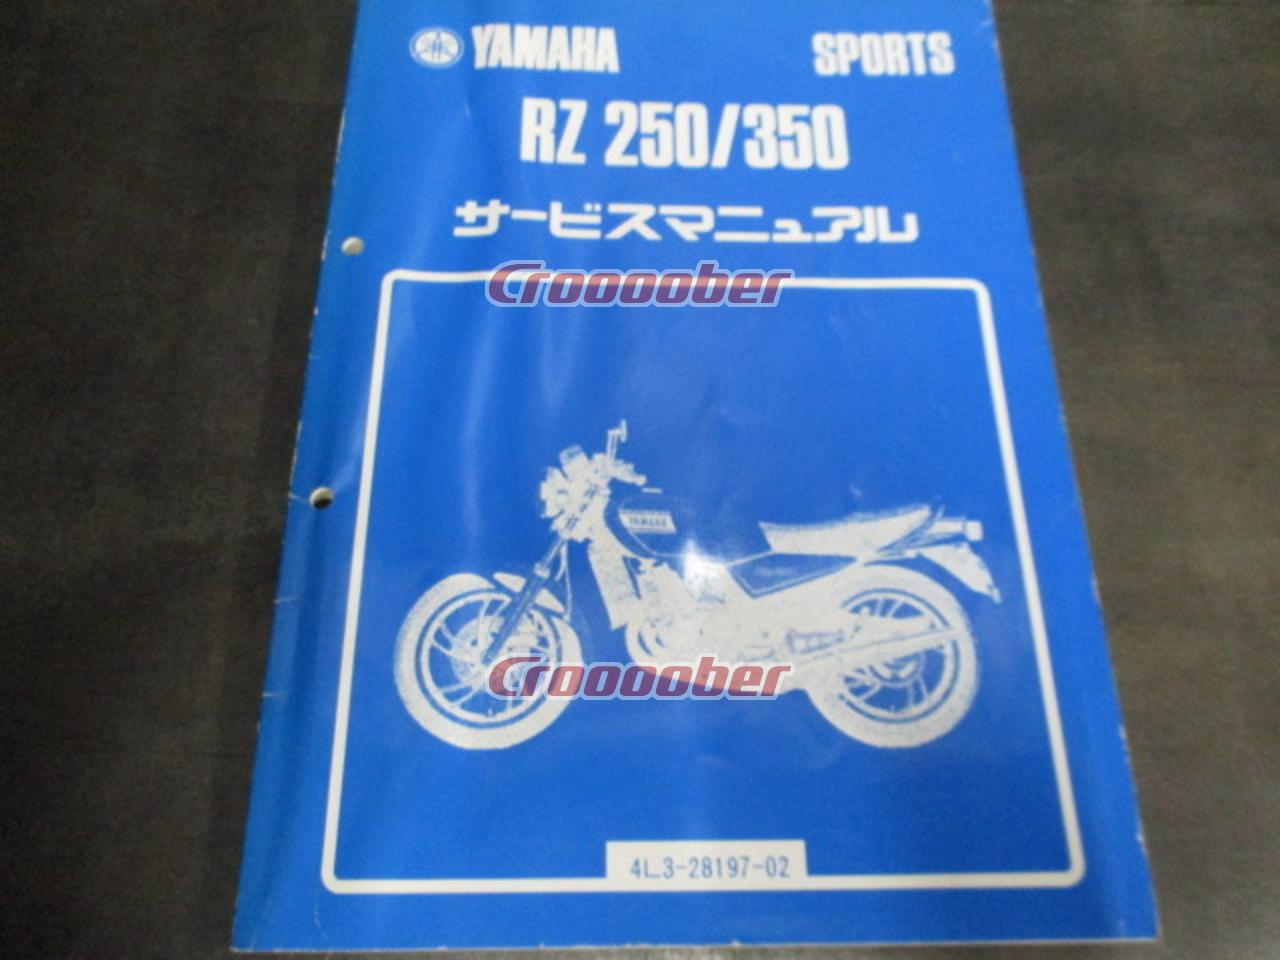 Yamaha rz250 manual pdf